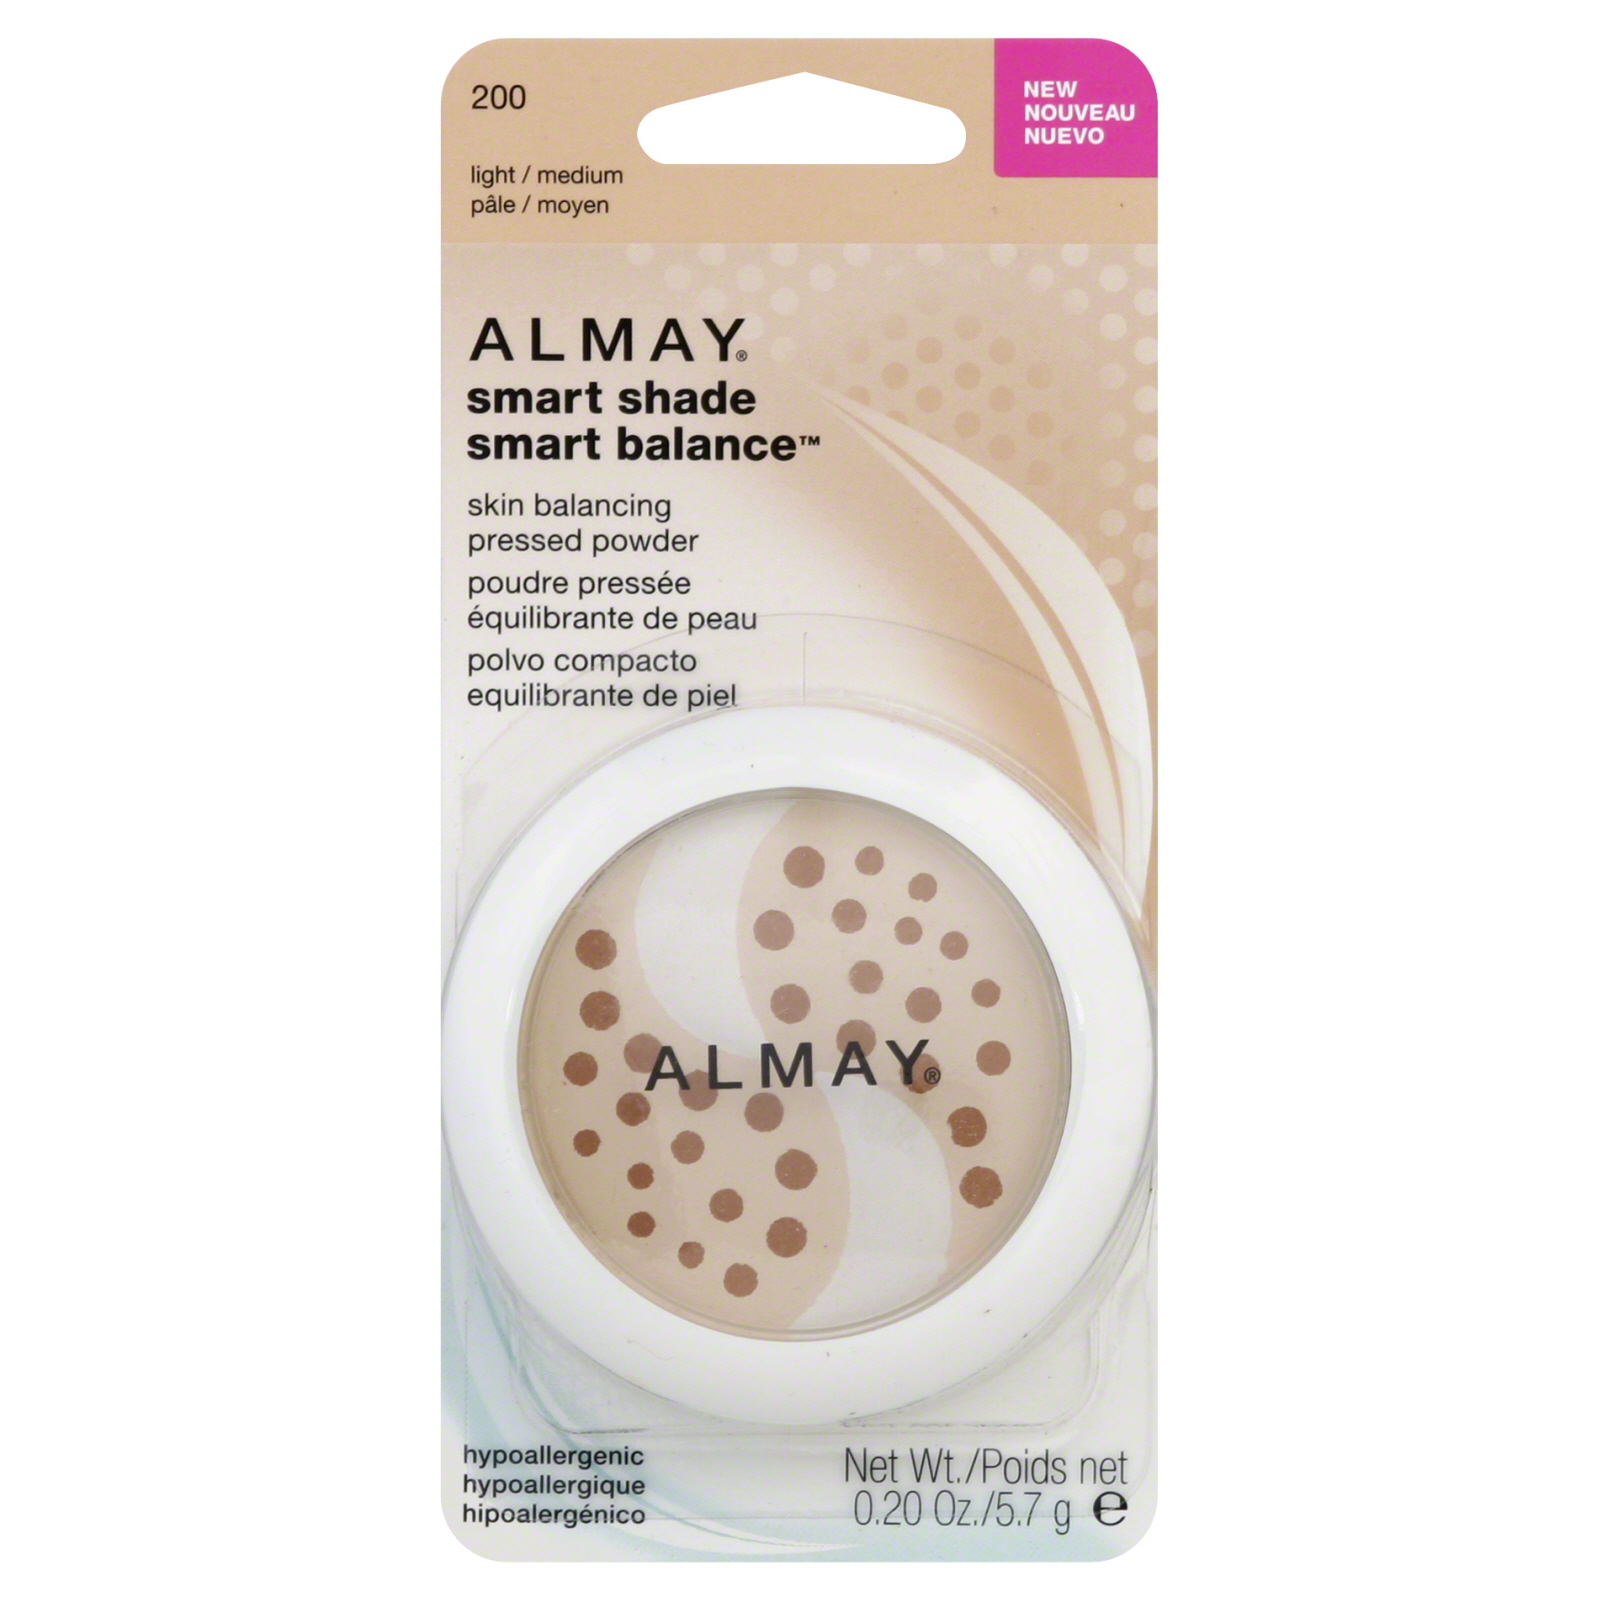 Almay Smart Shade Smart Balance Pressed Powder, Skin Balancing, Light/Medium